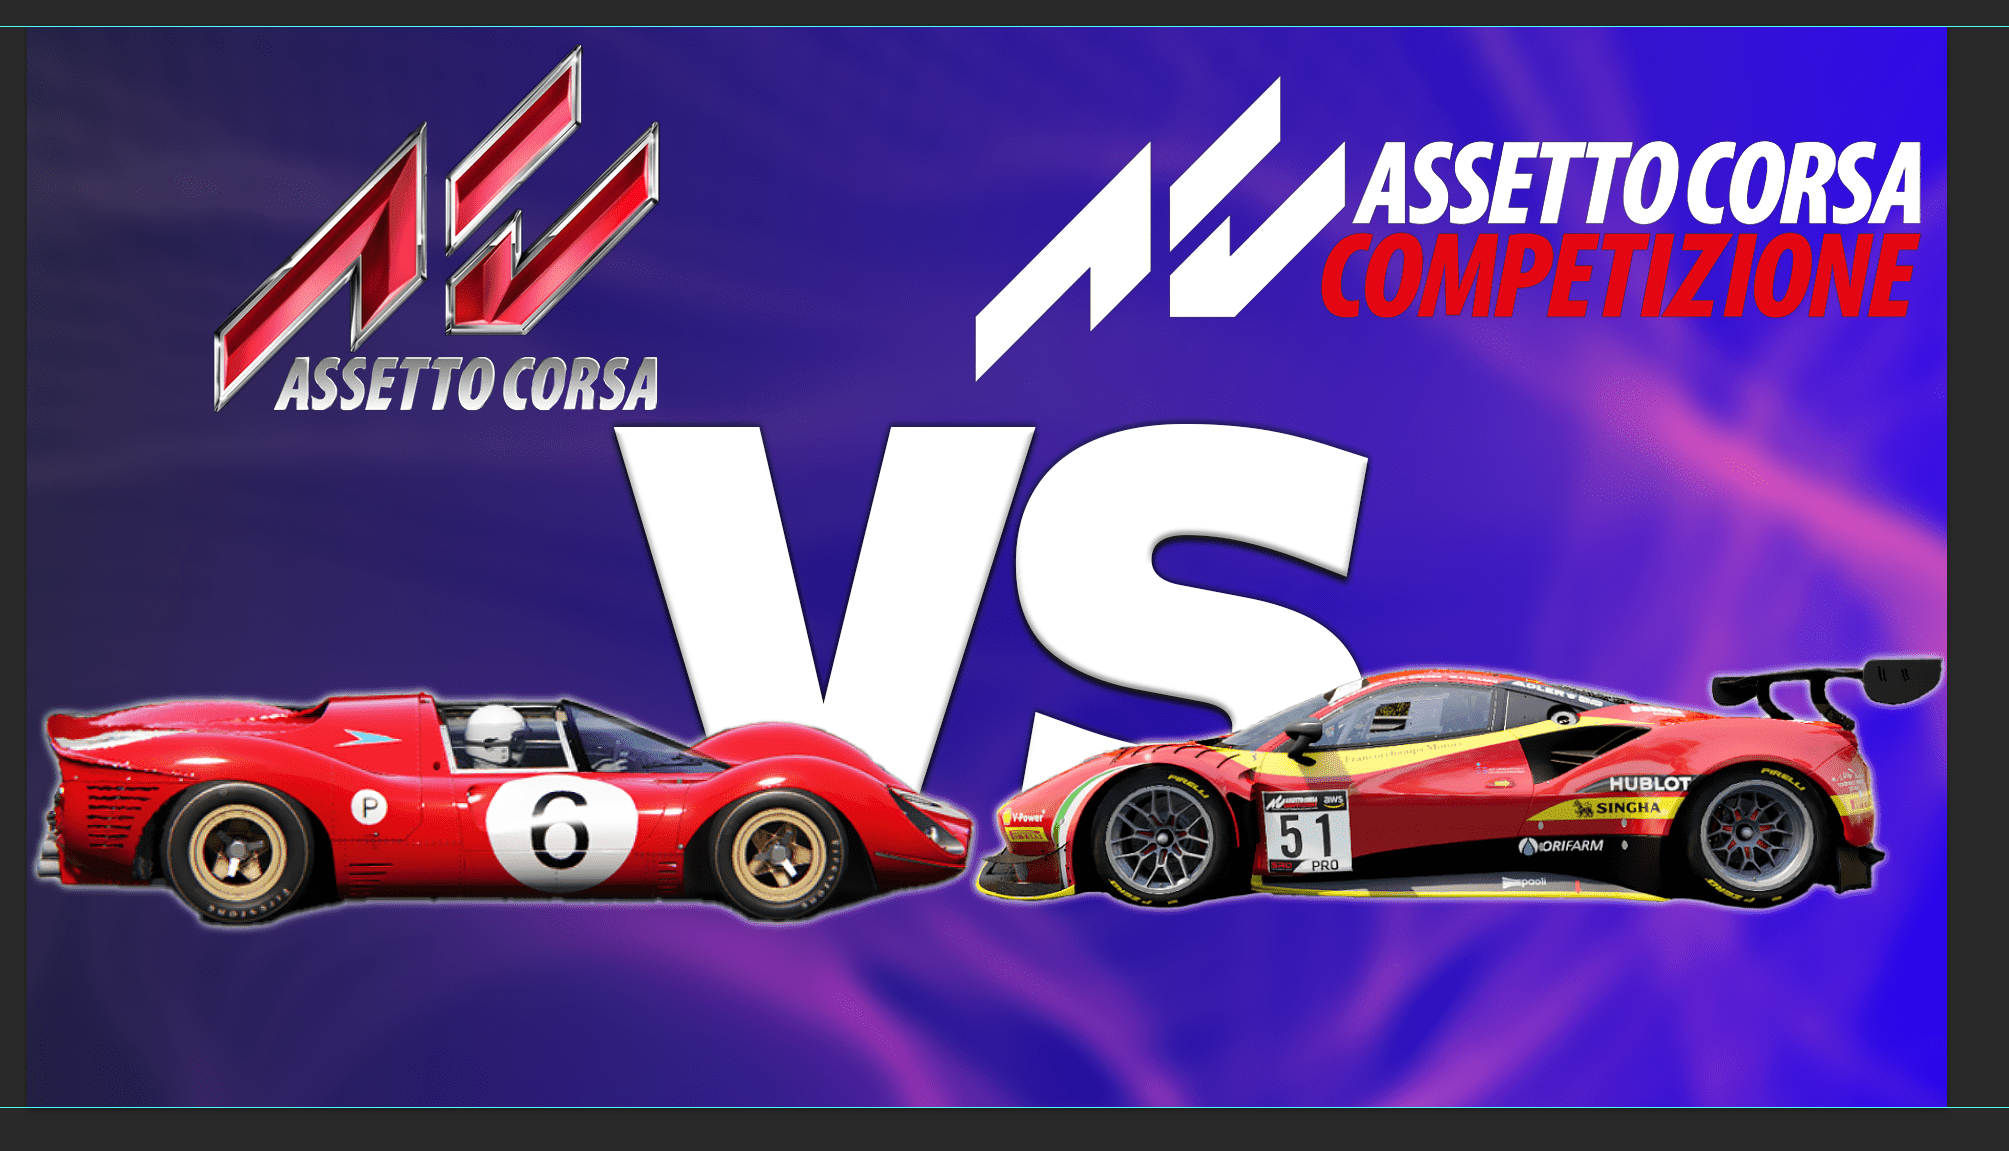 PS4 - Assetto Corsa - Console Game